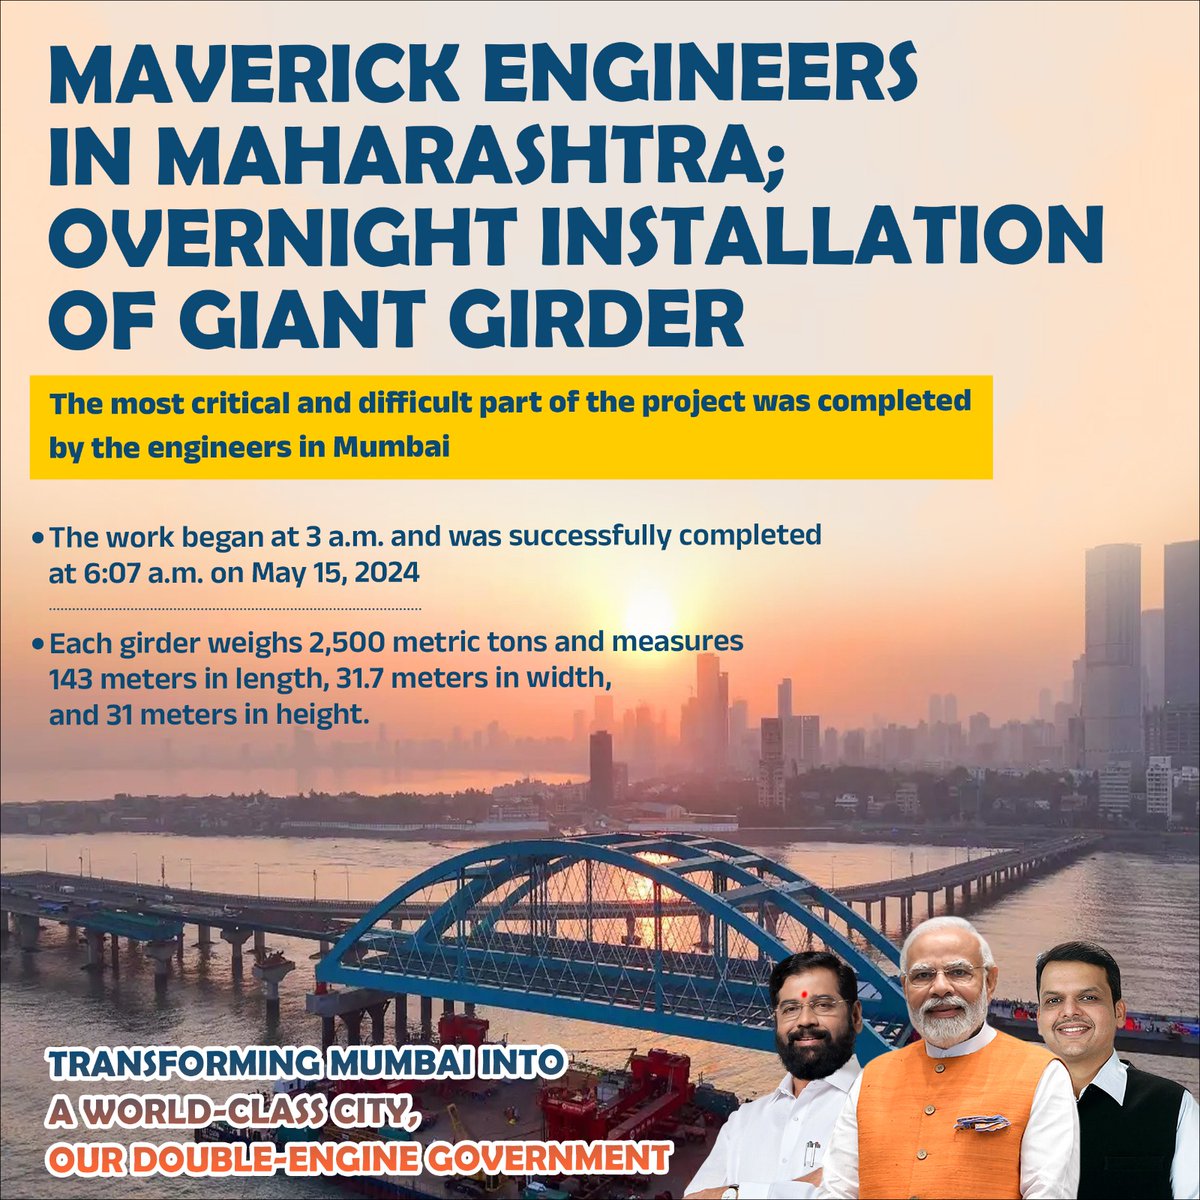 Mumbai engineers achieve the impossible with the installation of a 2,500-ton girder overnight. A testament to Maharashtra's engineering prowess under CM Eknath Shinde's dynamic leadership. #UrbanDevelopment #MaharashtraModel